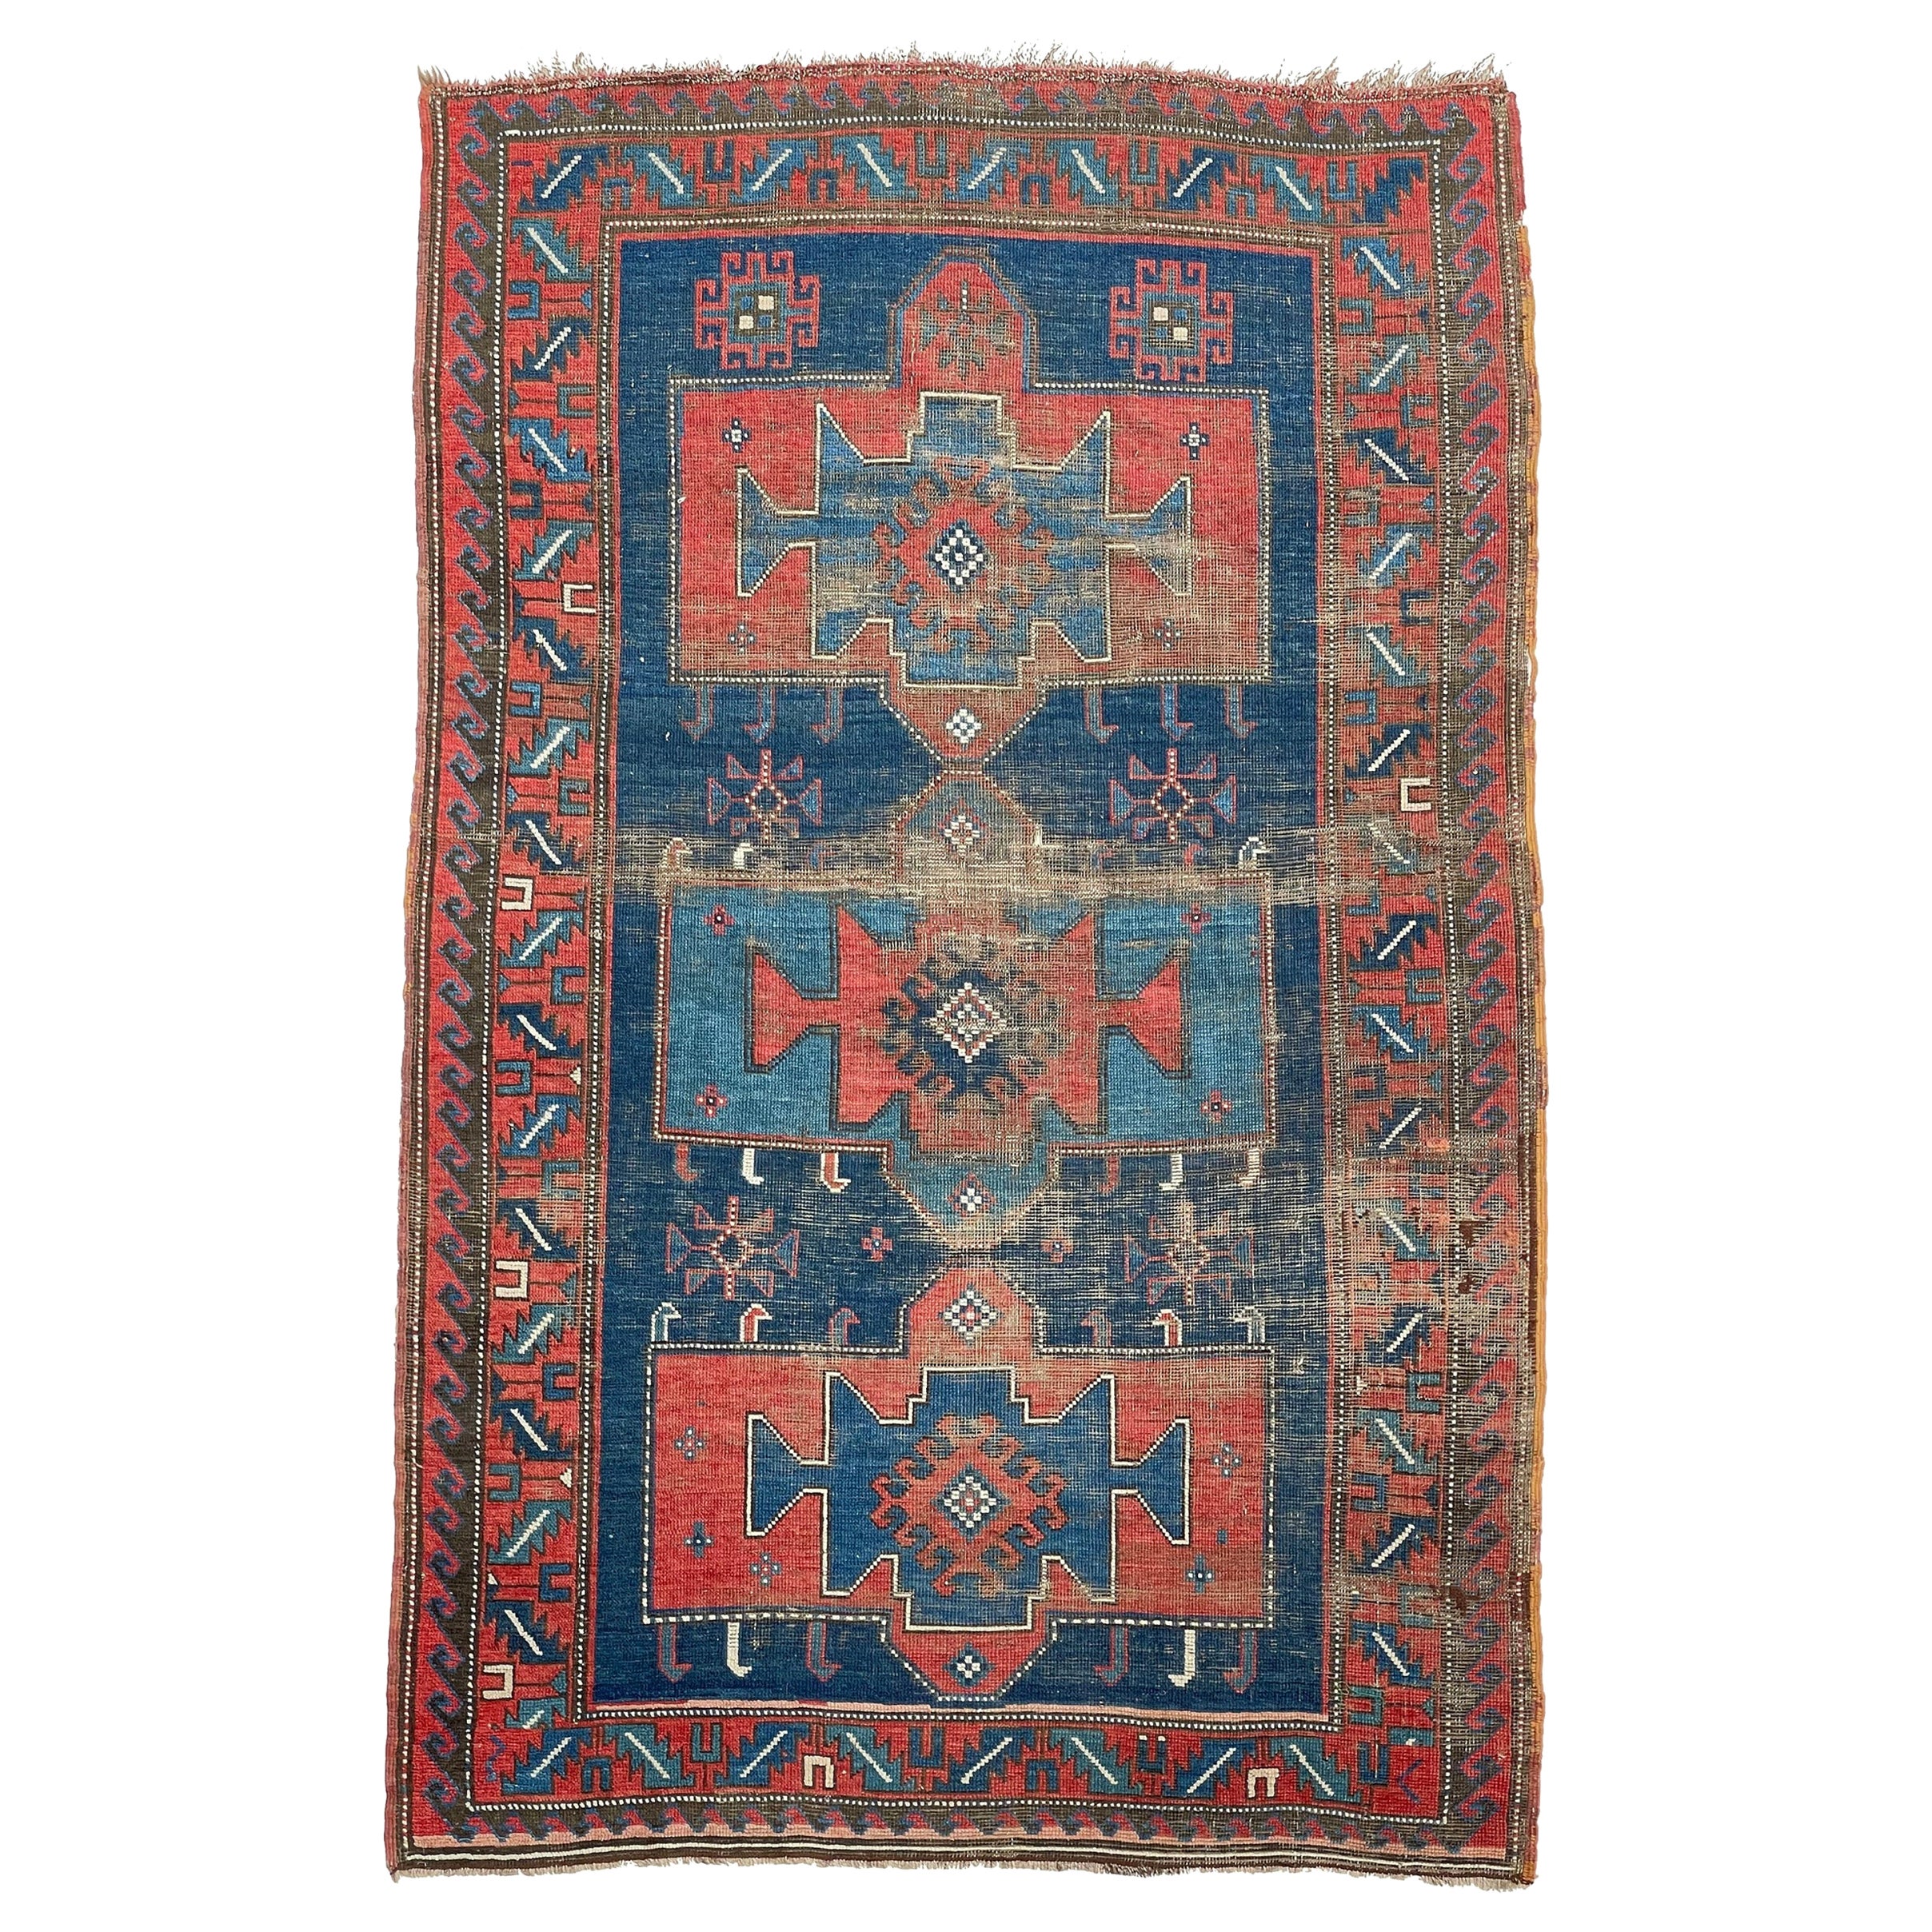 Old World Sensational Antique Caucasian Geometric Antique Kazak Tribal Rug For Sale